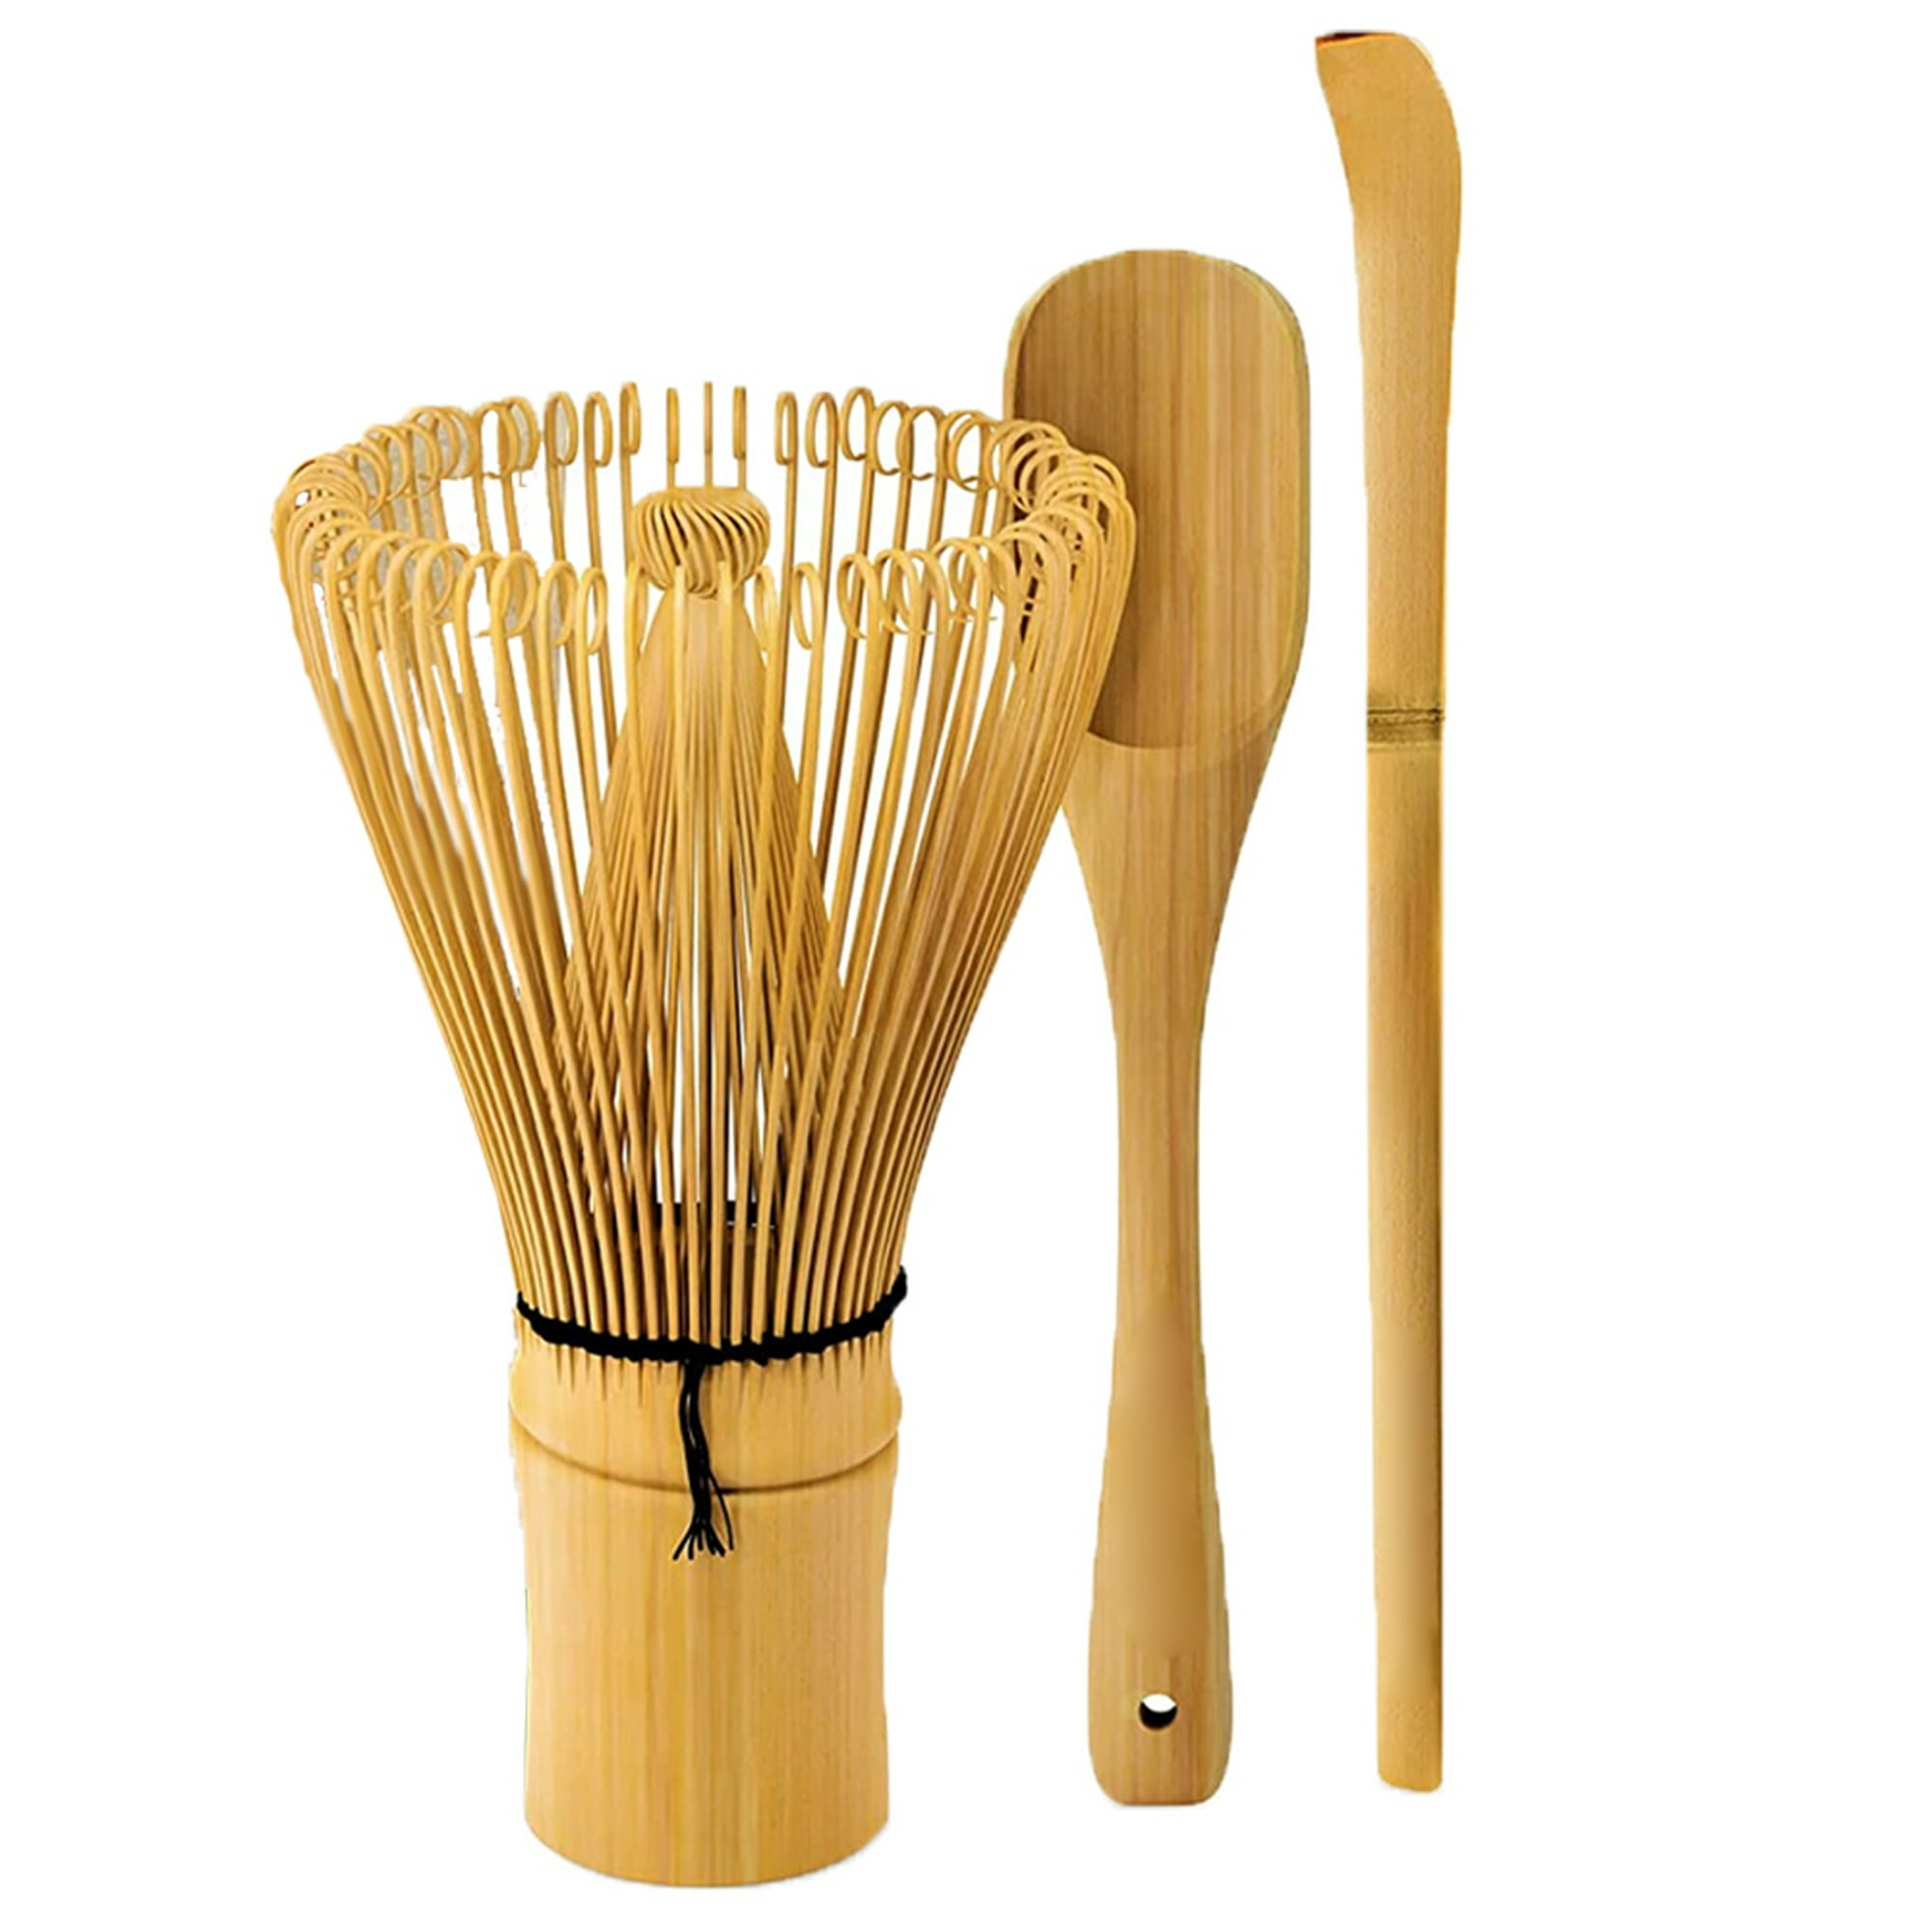 Batidor MatchaDNA. Batidor de bambú para preparar matcha, hecho a mano